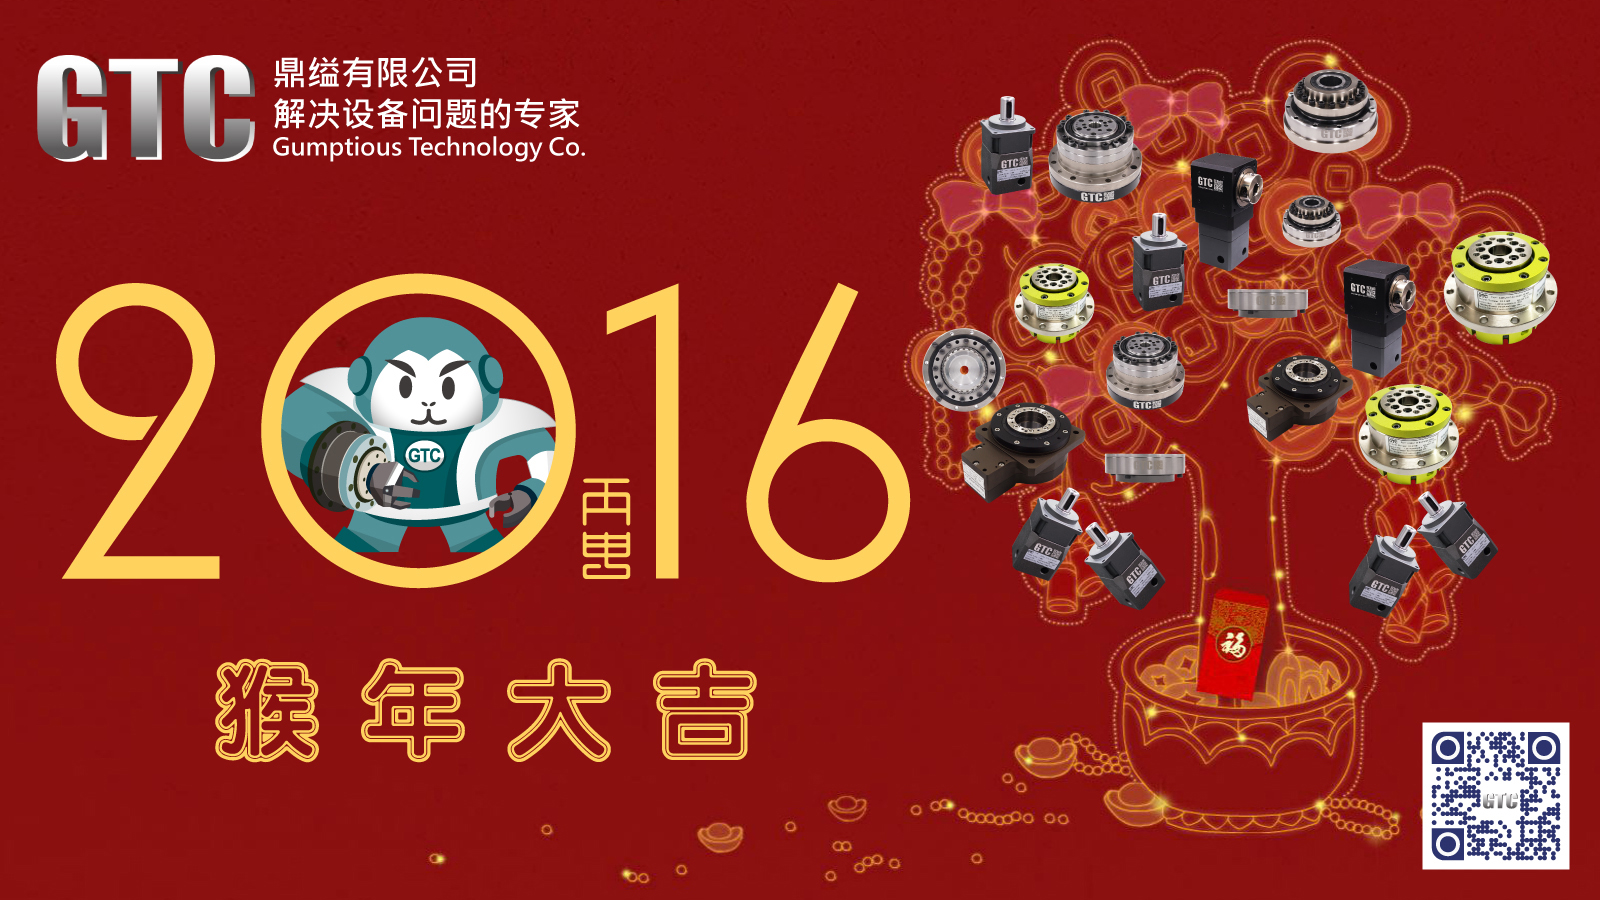 2016 happy chinese new year